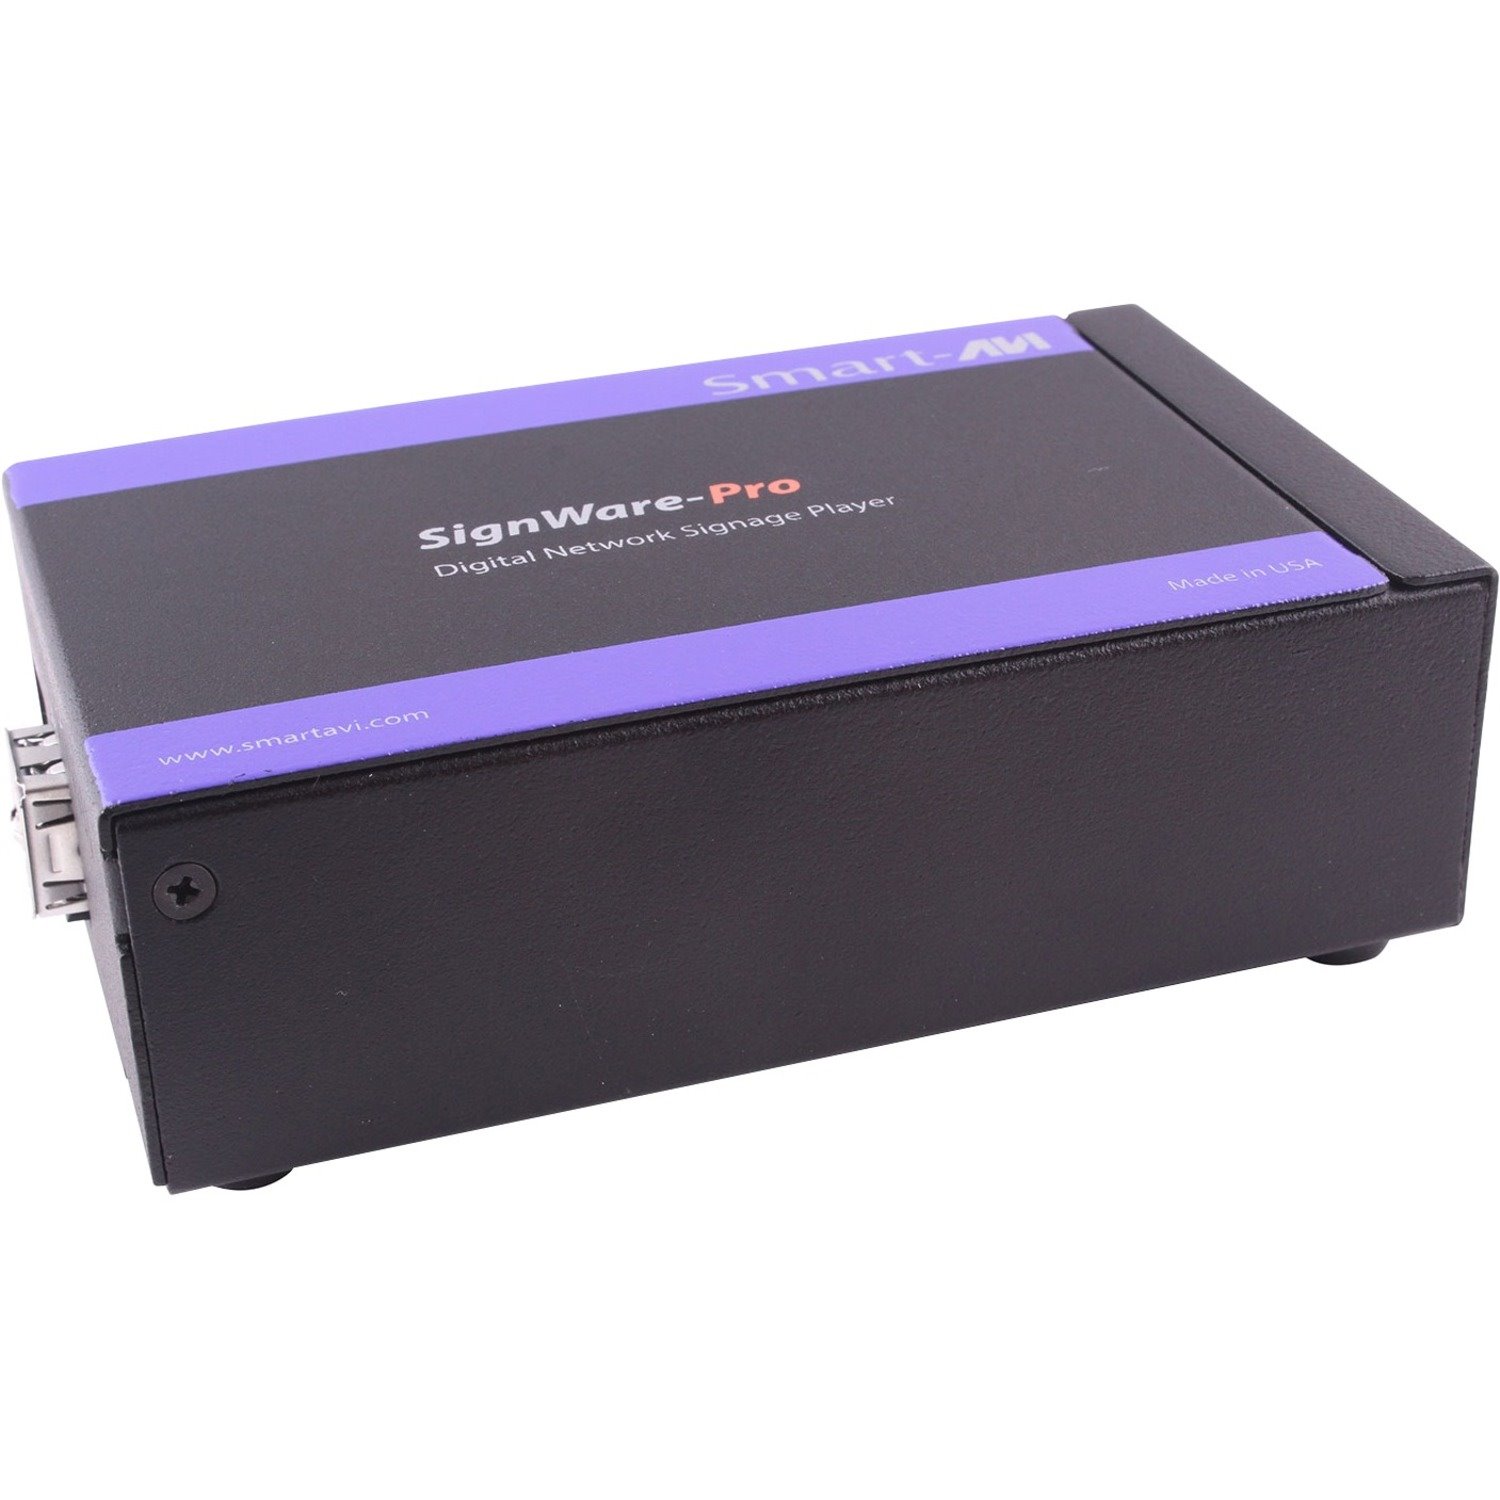 SmartAVI SignWare-Pro AP-SNWP-8GS Digital Signage Appliance